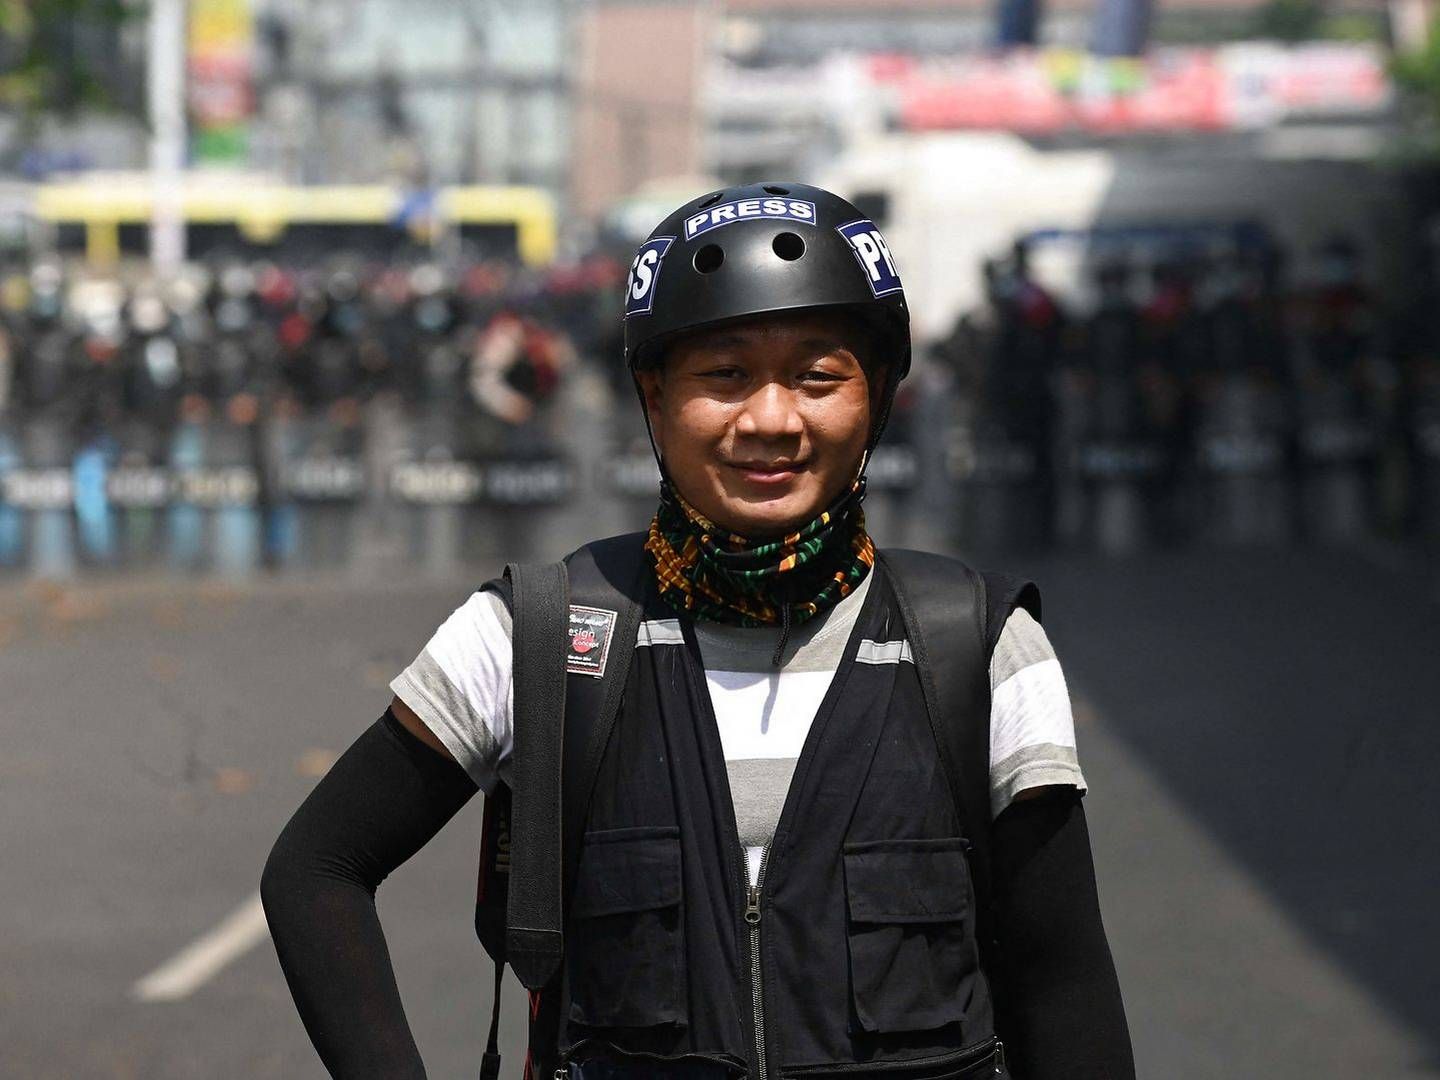 Thein Zaw, der arbejder for AP, er blandt de anholdre pressefolk. | Foto: AFP/Ritzau Scanpix